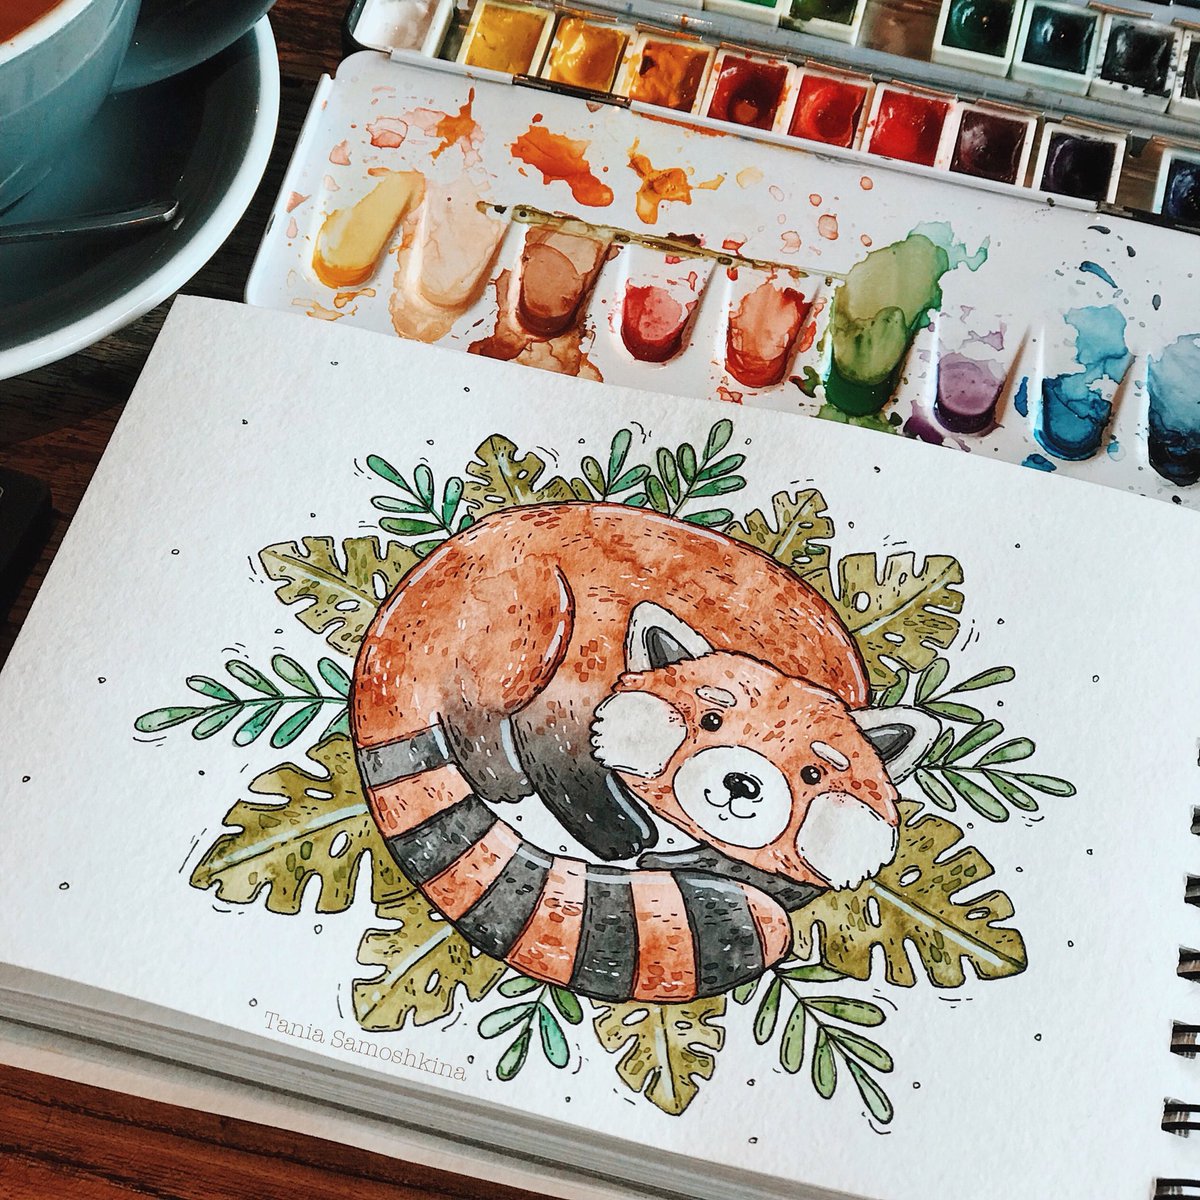 Red Panda everybody✨ #redpanda #illustration #animaldraw #sketchbook #artistontwitter #art #watercolor #drawing